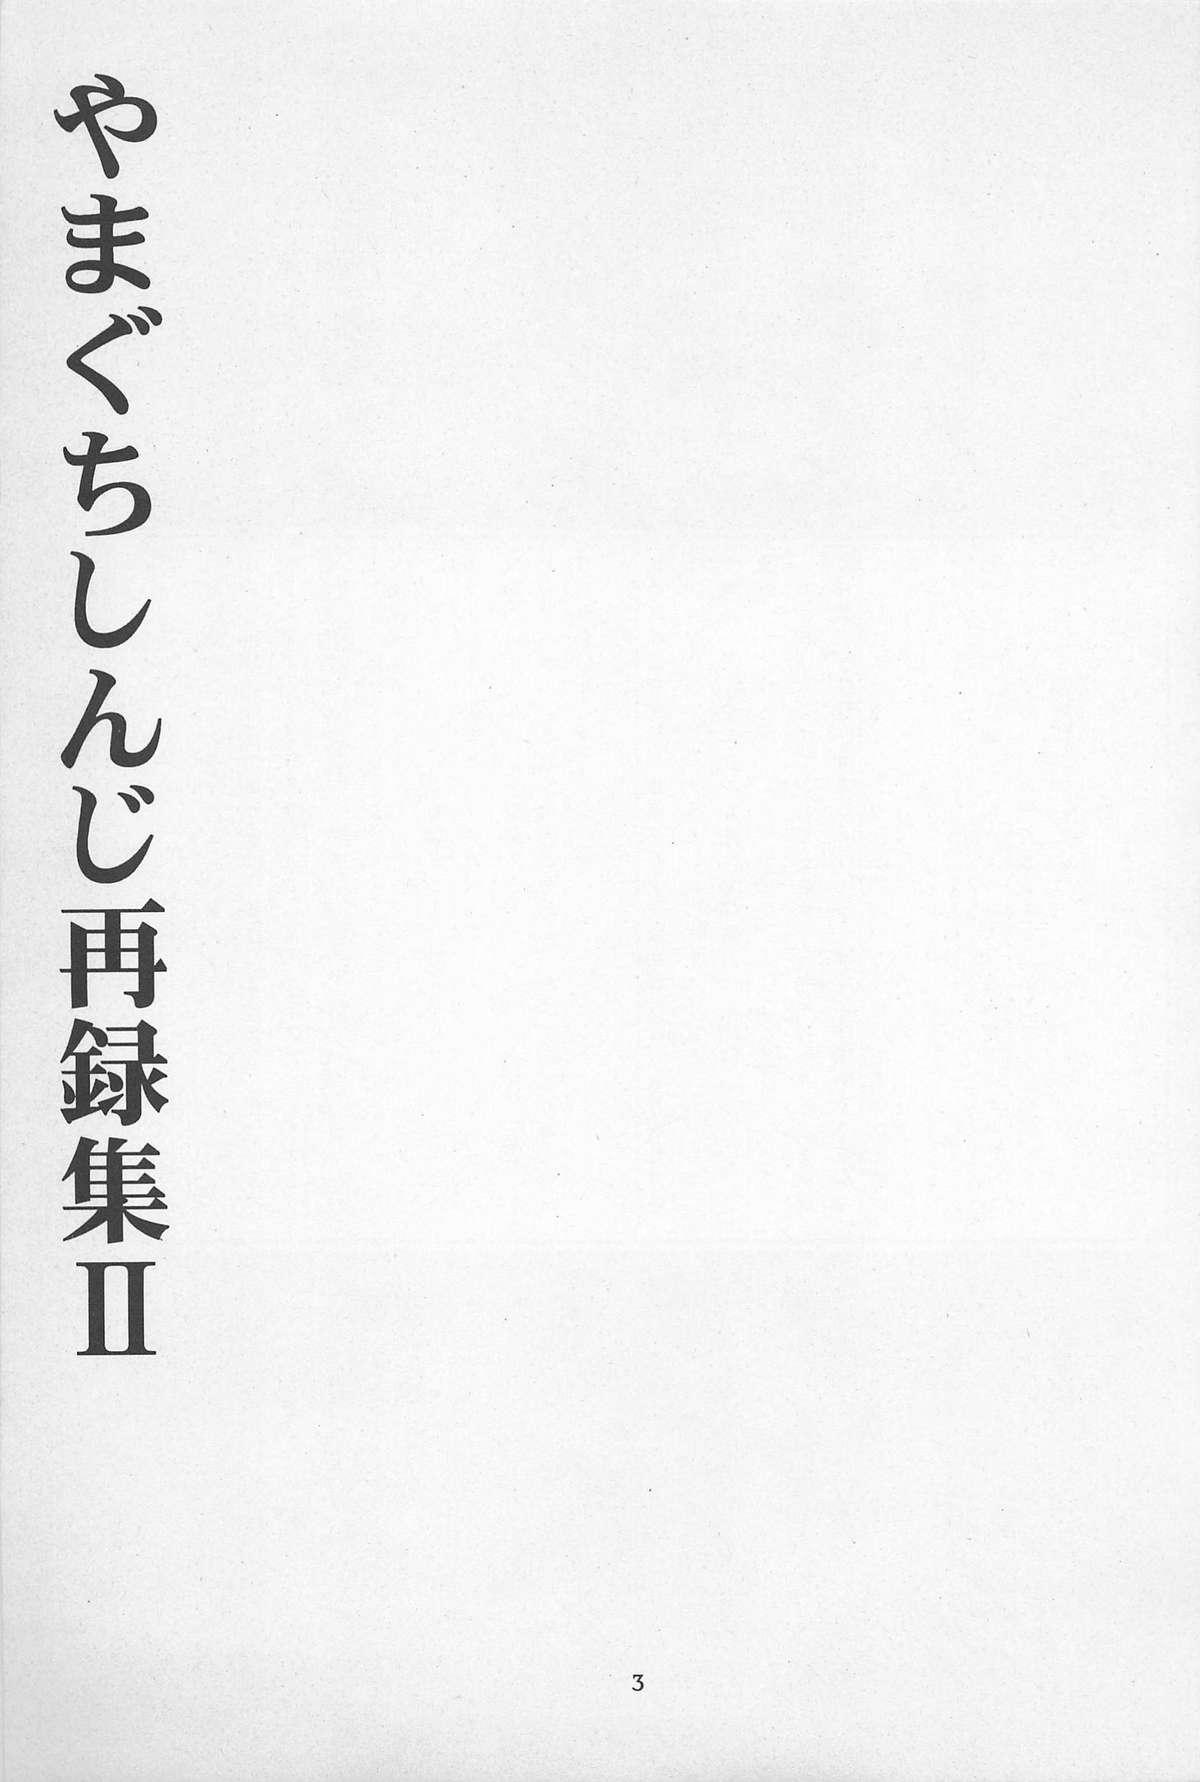 TABOO II THE WORKS OF SHINJI YAMAGUCHI 2